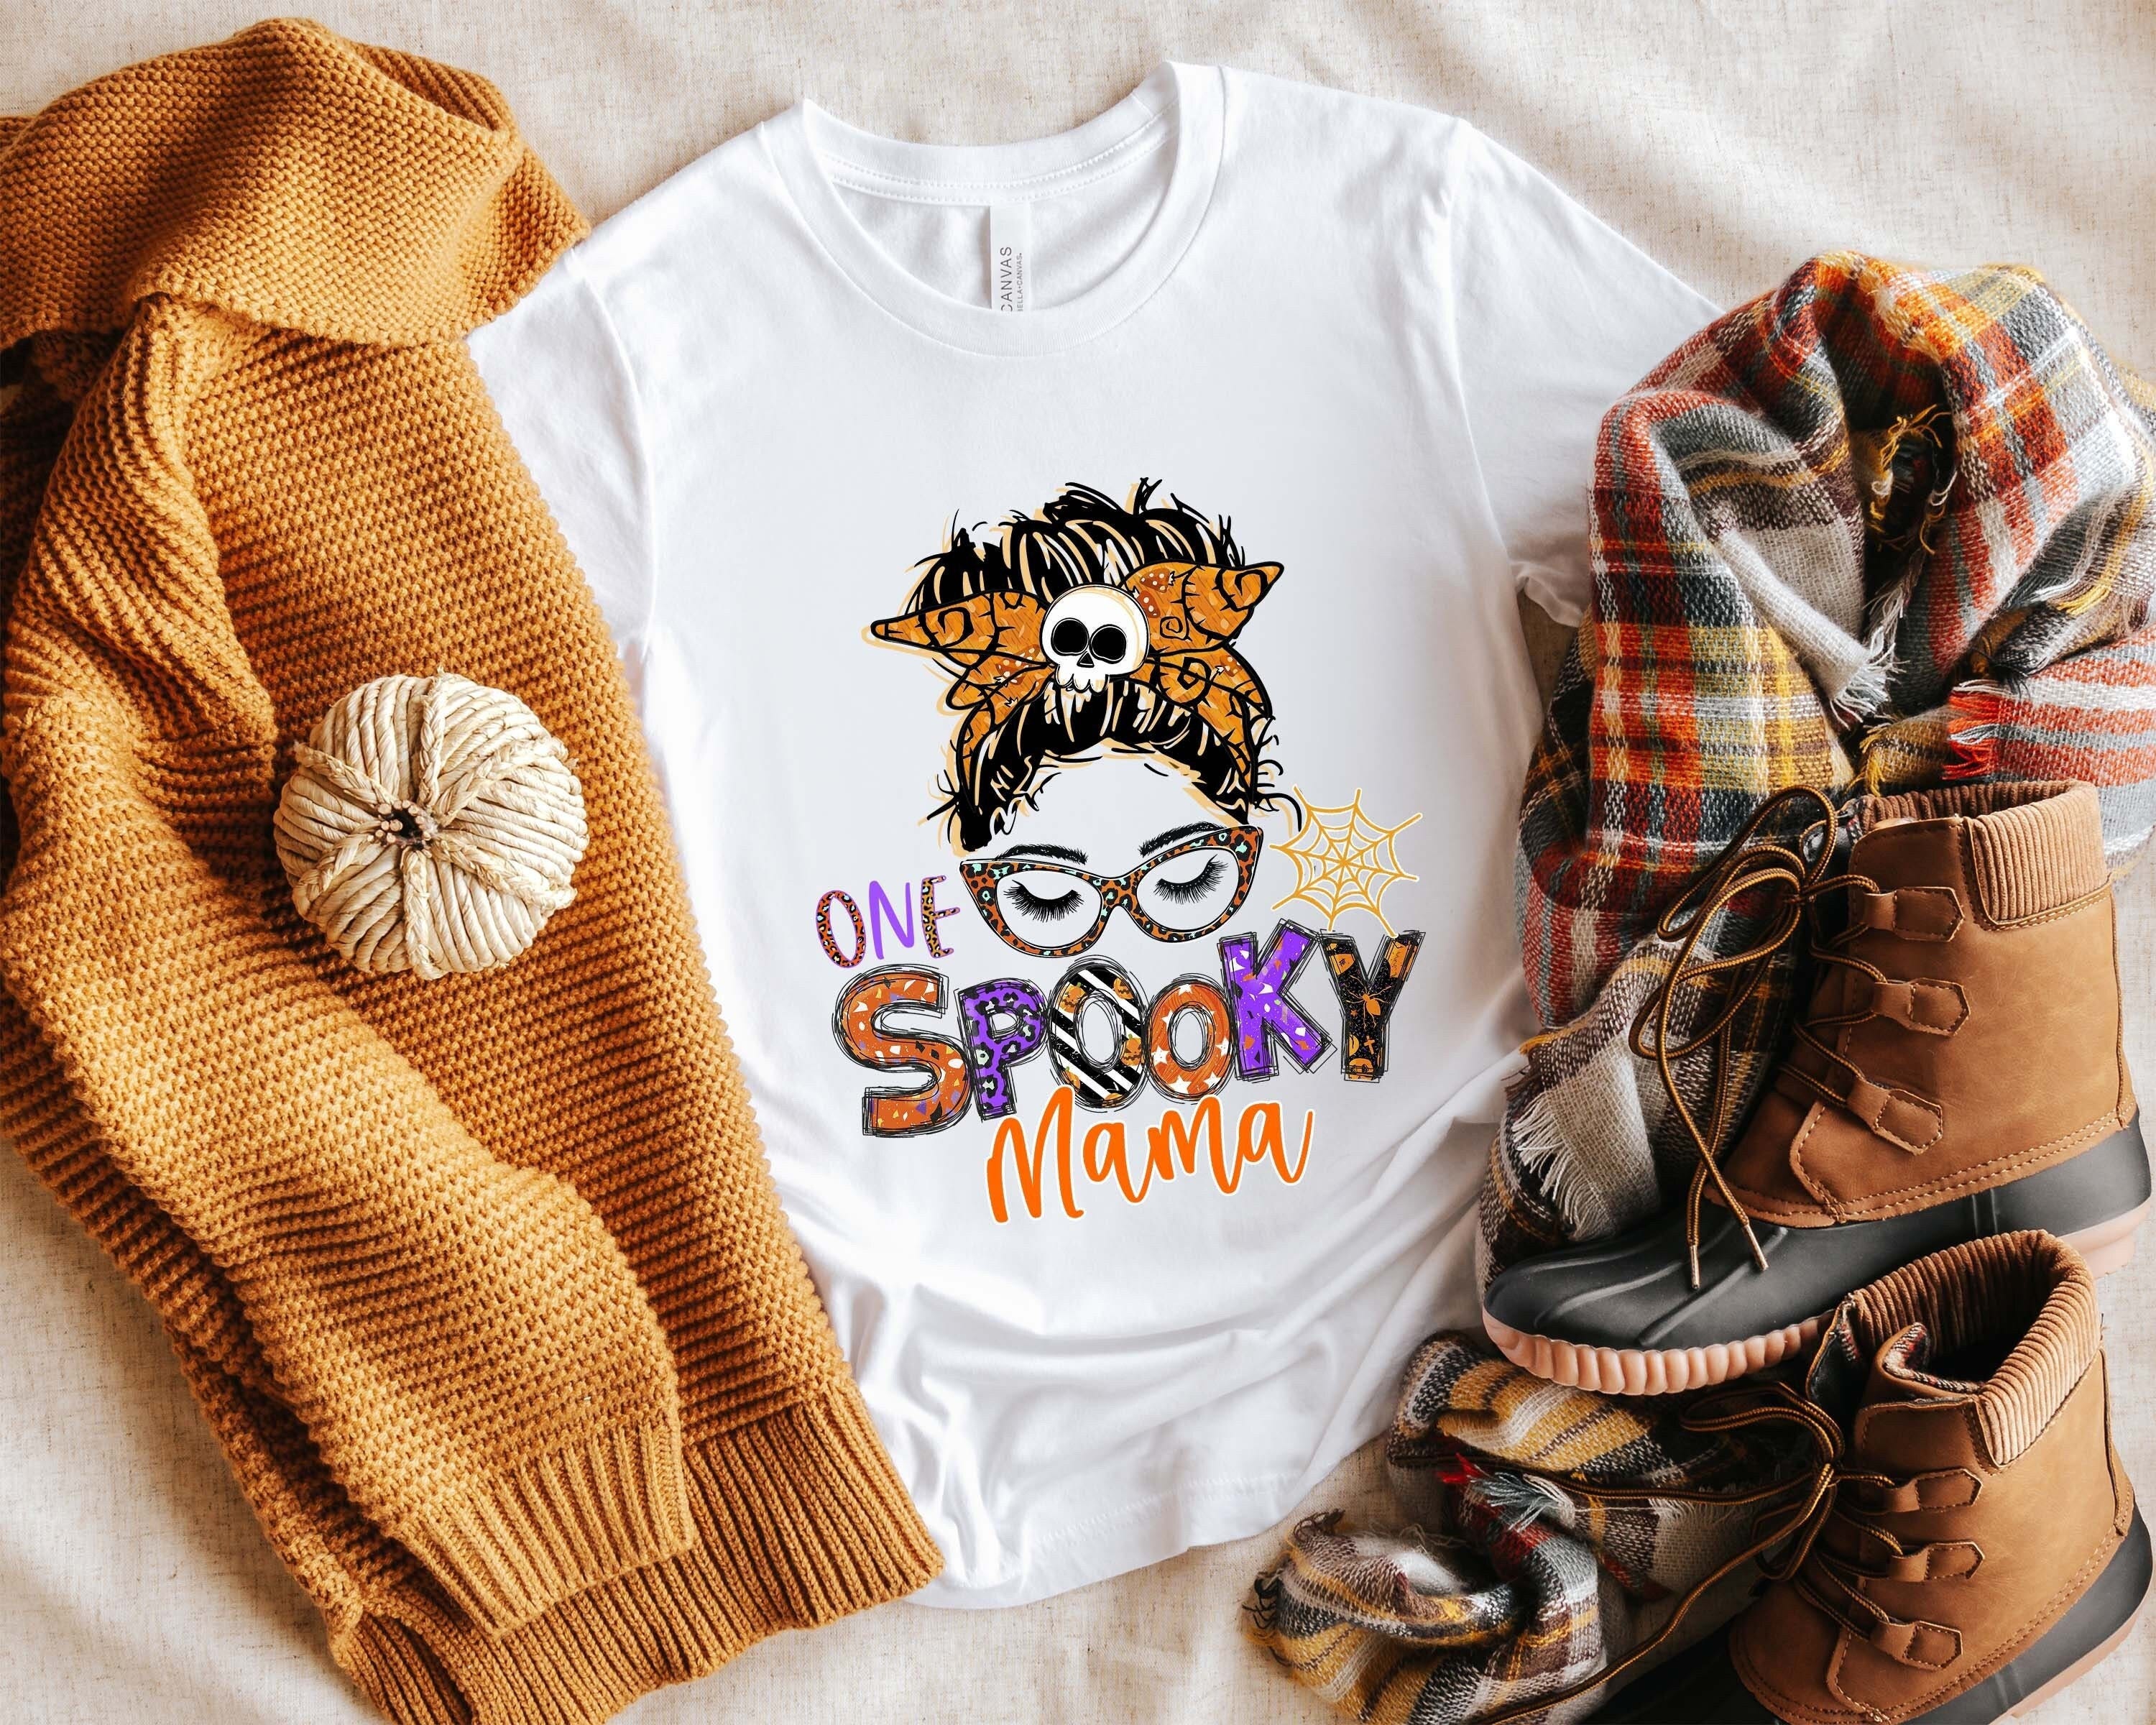 One Spooky Mama Shirt, Spooky Vibes Shirt, Halloween Gift, Cute Halloween Tee, Pumpkin Shirt, Halloween Mom, Women Halloween